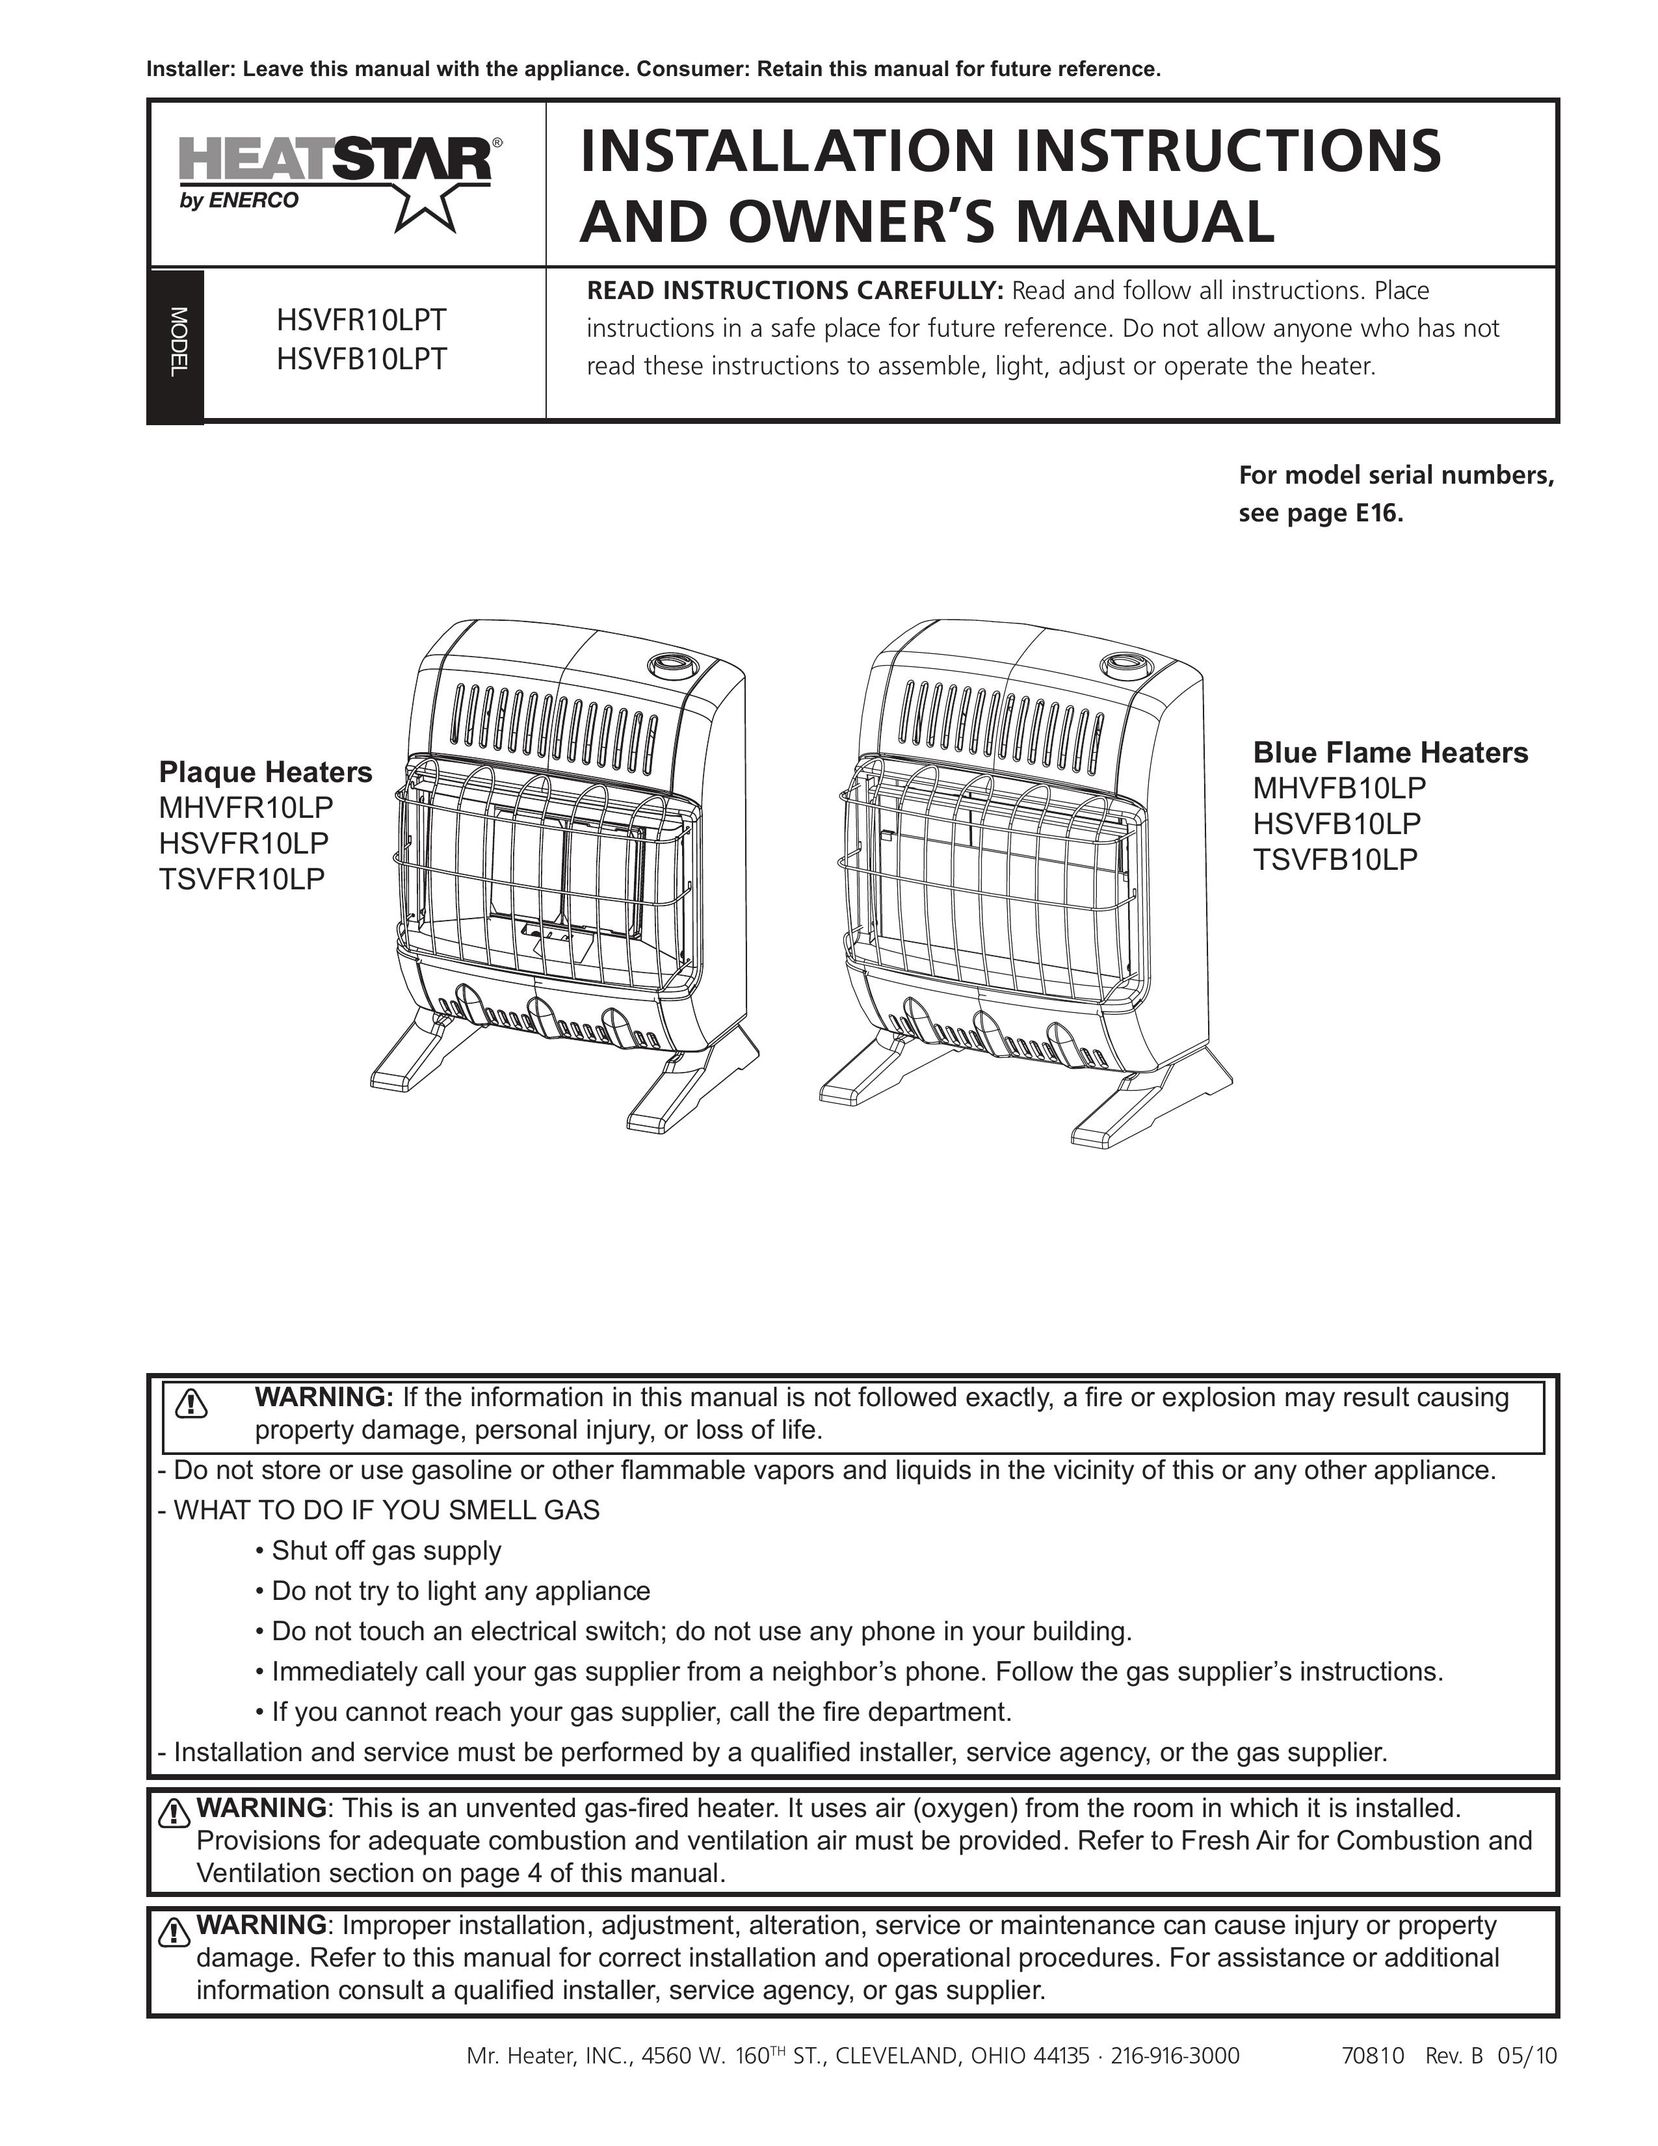 Enerco TSVFR10LP Gas Heater User Manual